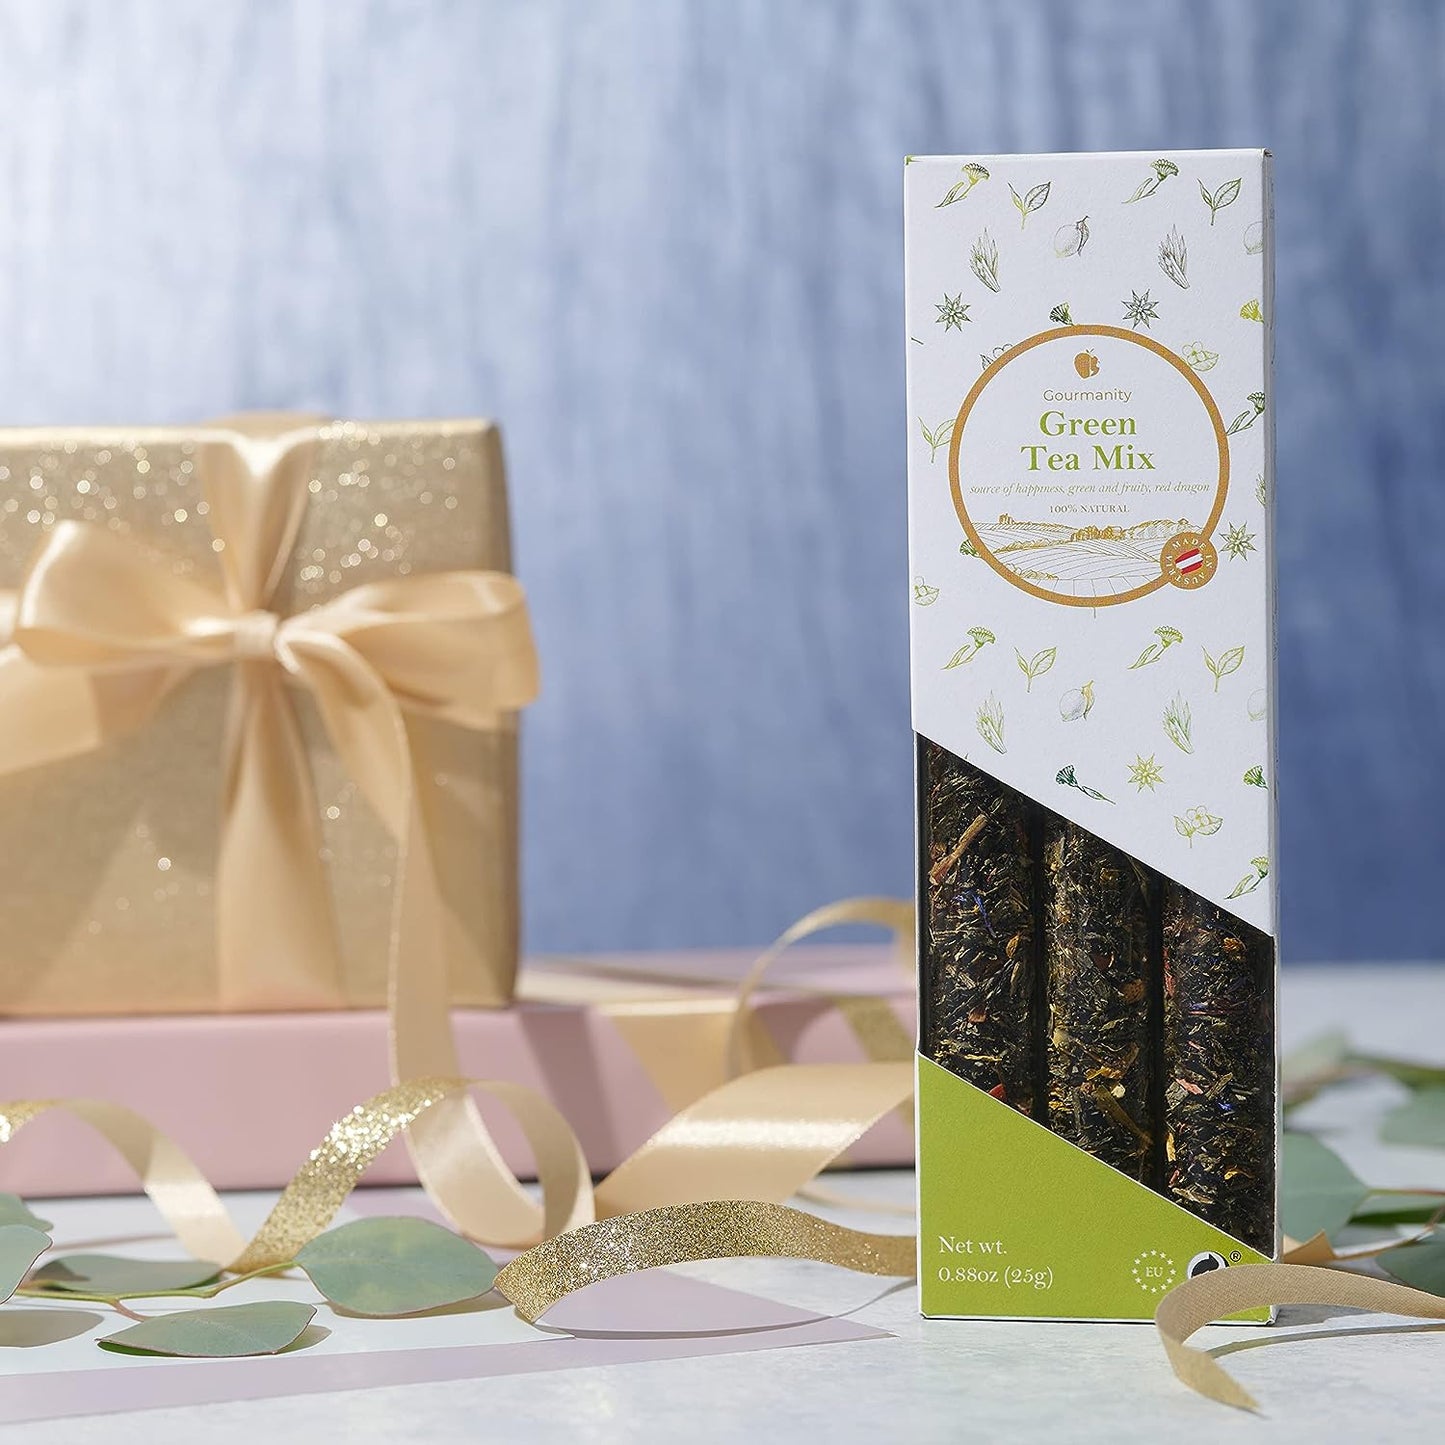 Gourmanity Tea Sampler Gift Set Japanese Green Tea Mix 3 Flavors